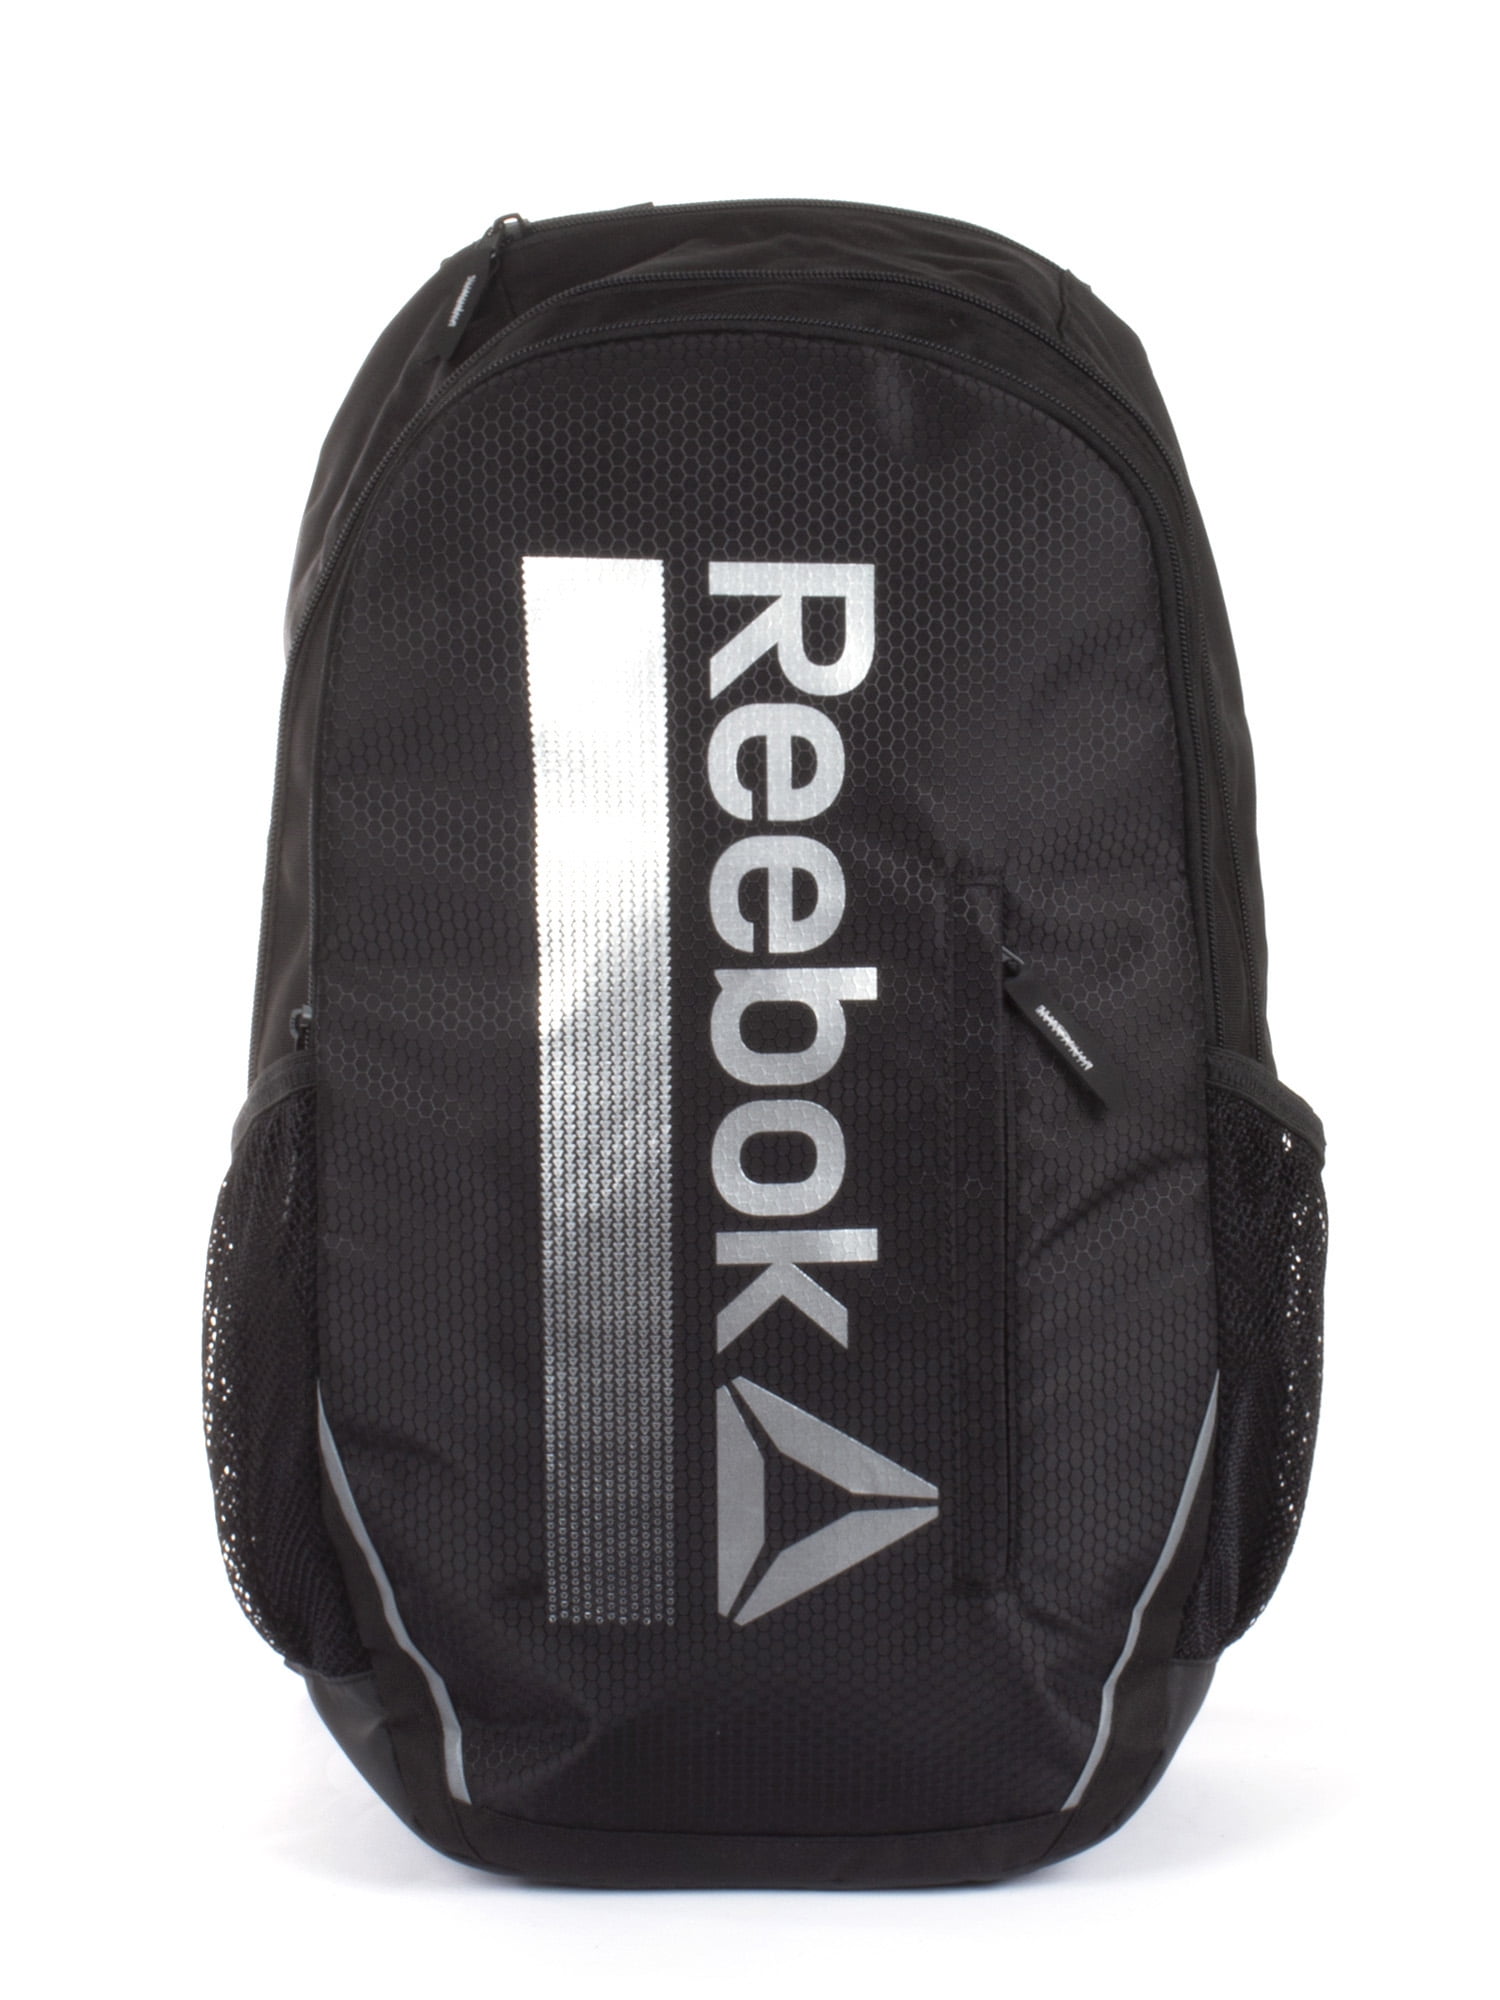 Reebok - Reebok Trainer Backpack - Walmart.com - Walmart.com